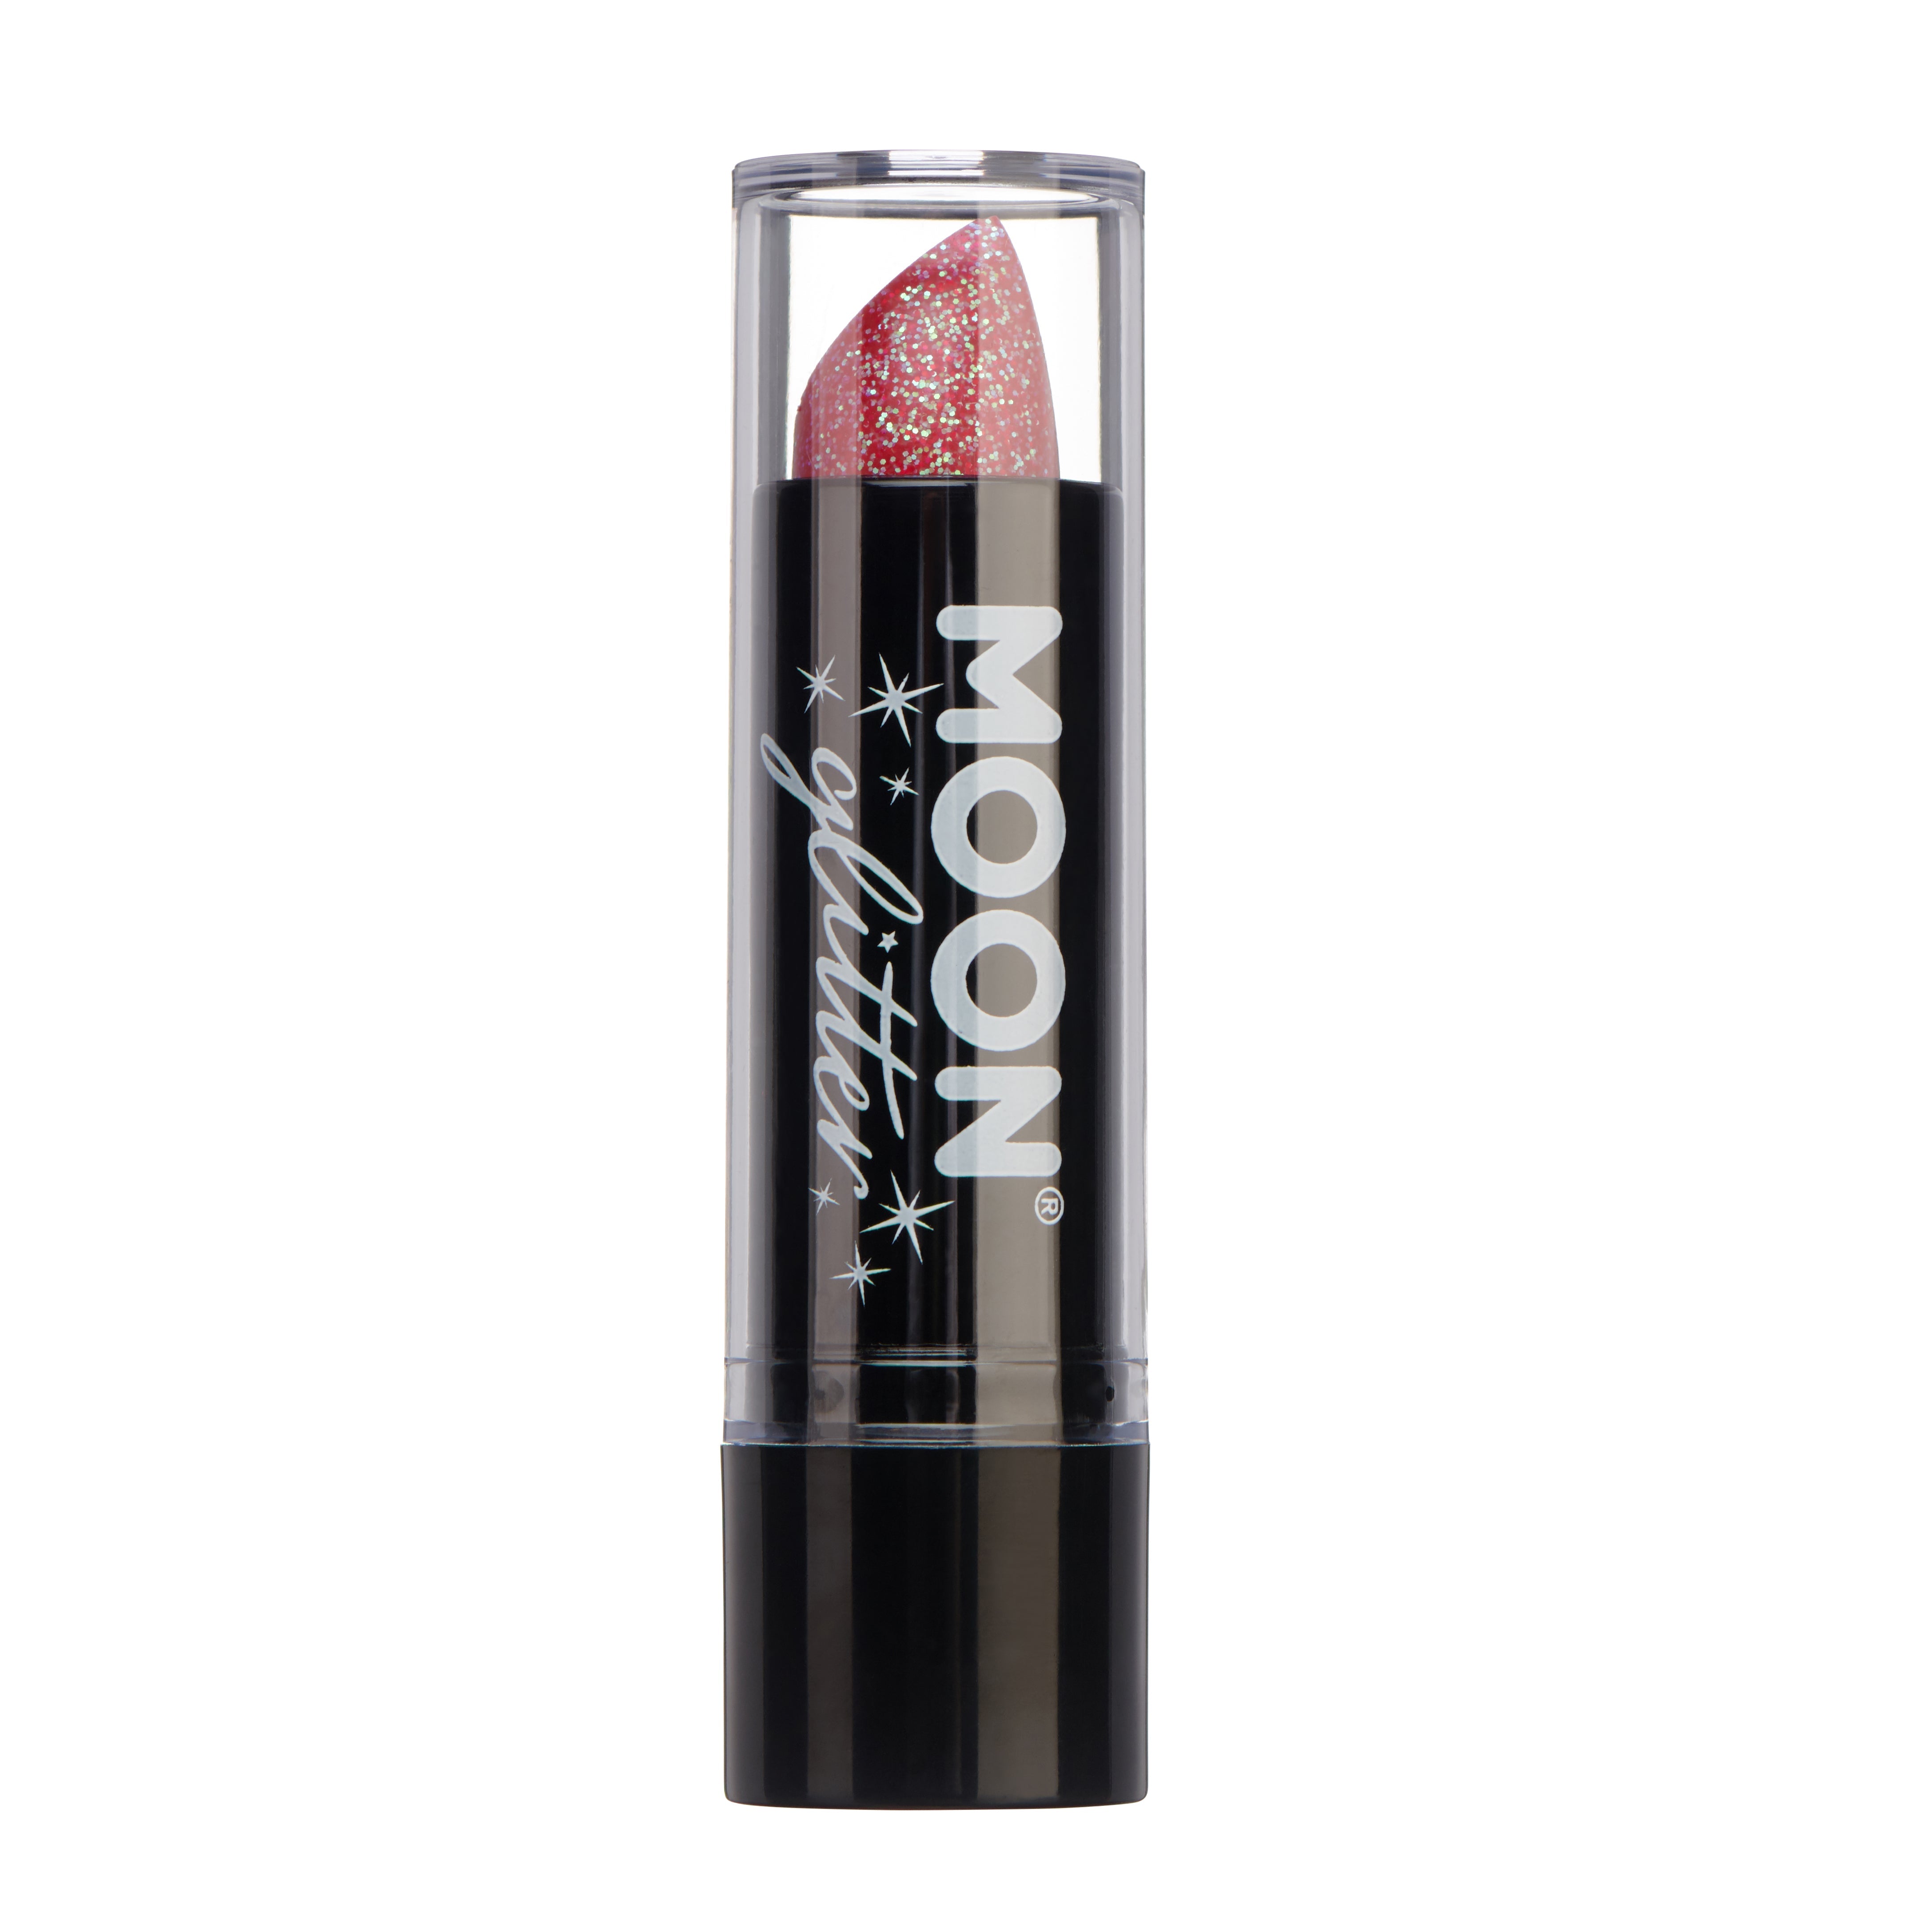 Cherry - Iridescent Glitter Lipstick, 5g. Cosmetically certified, FDA & Health Canada compliant and cruelty free.